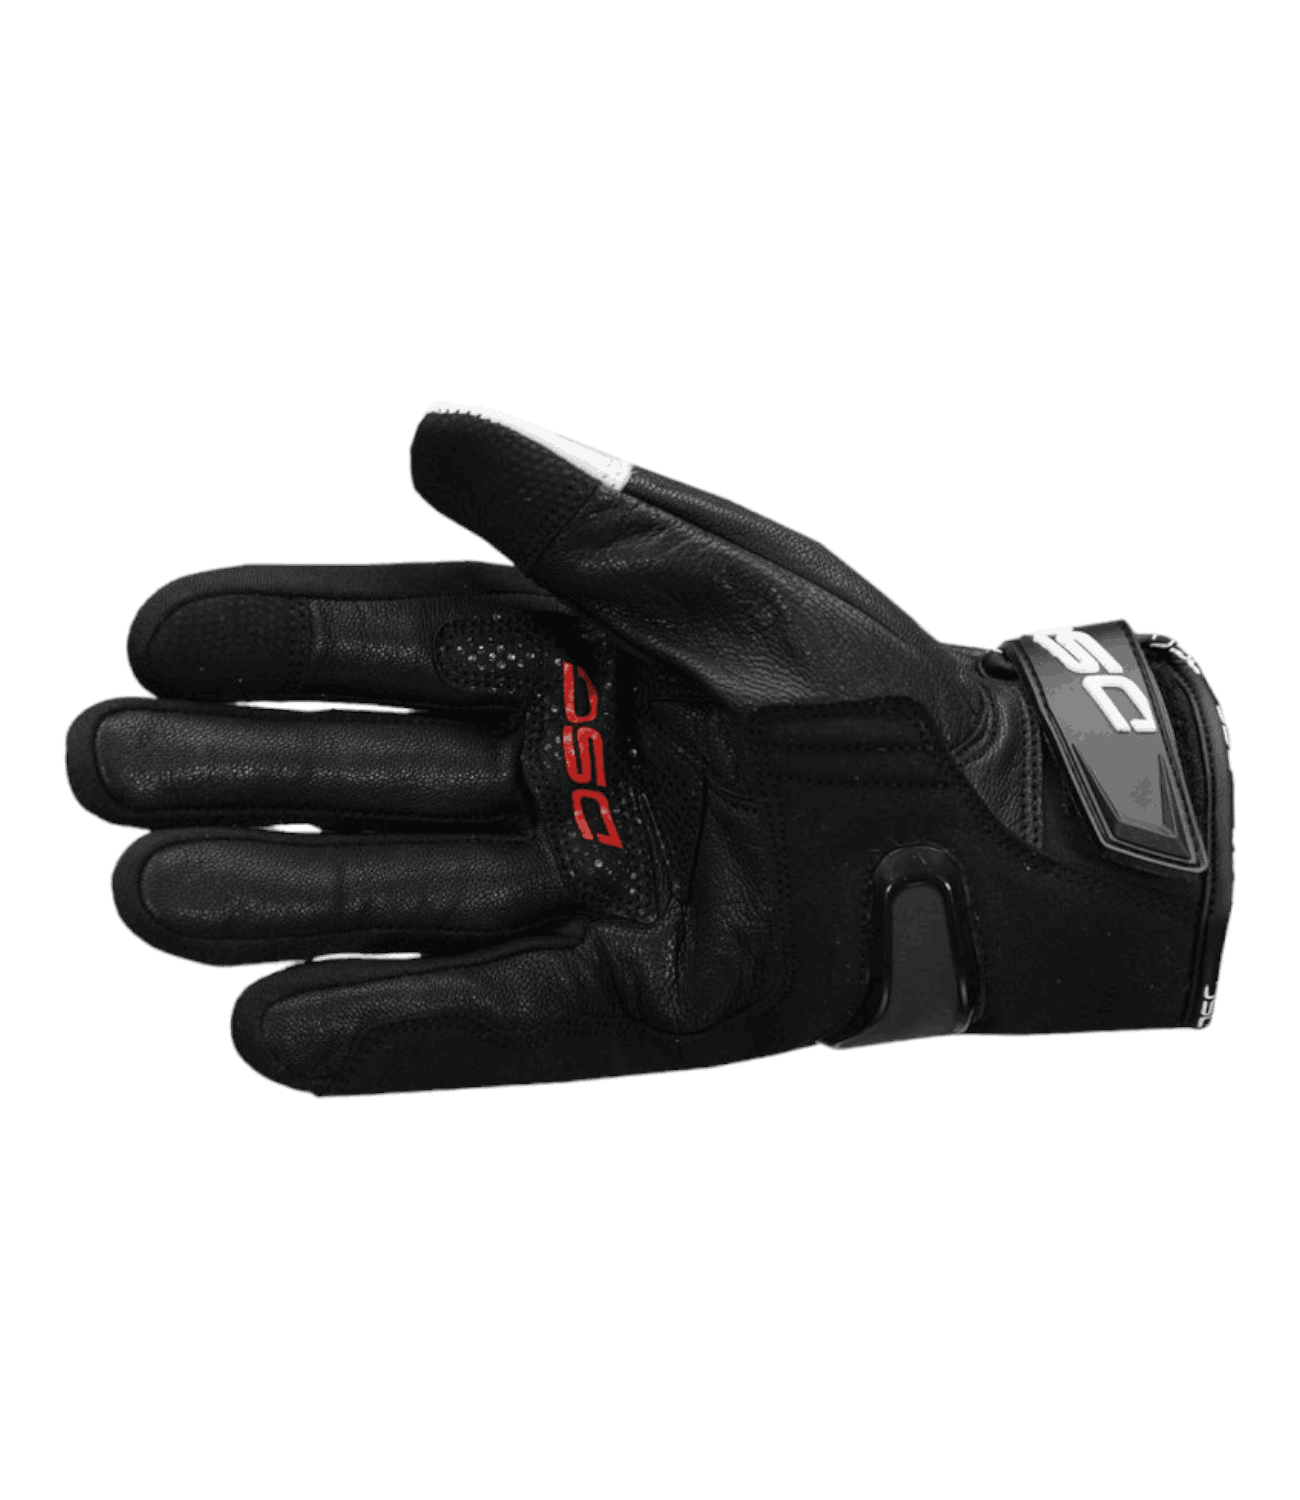 DSG Carbon X Riding Glove Black White